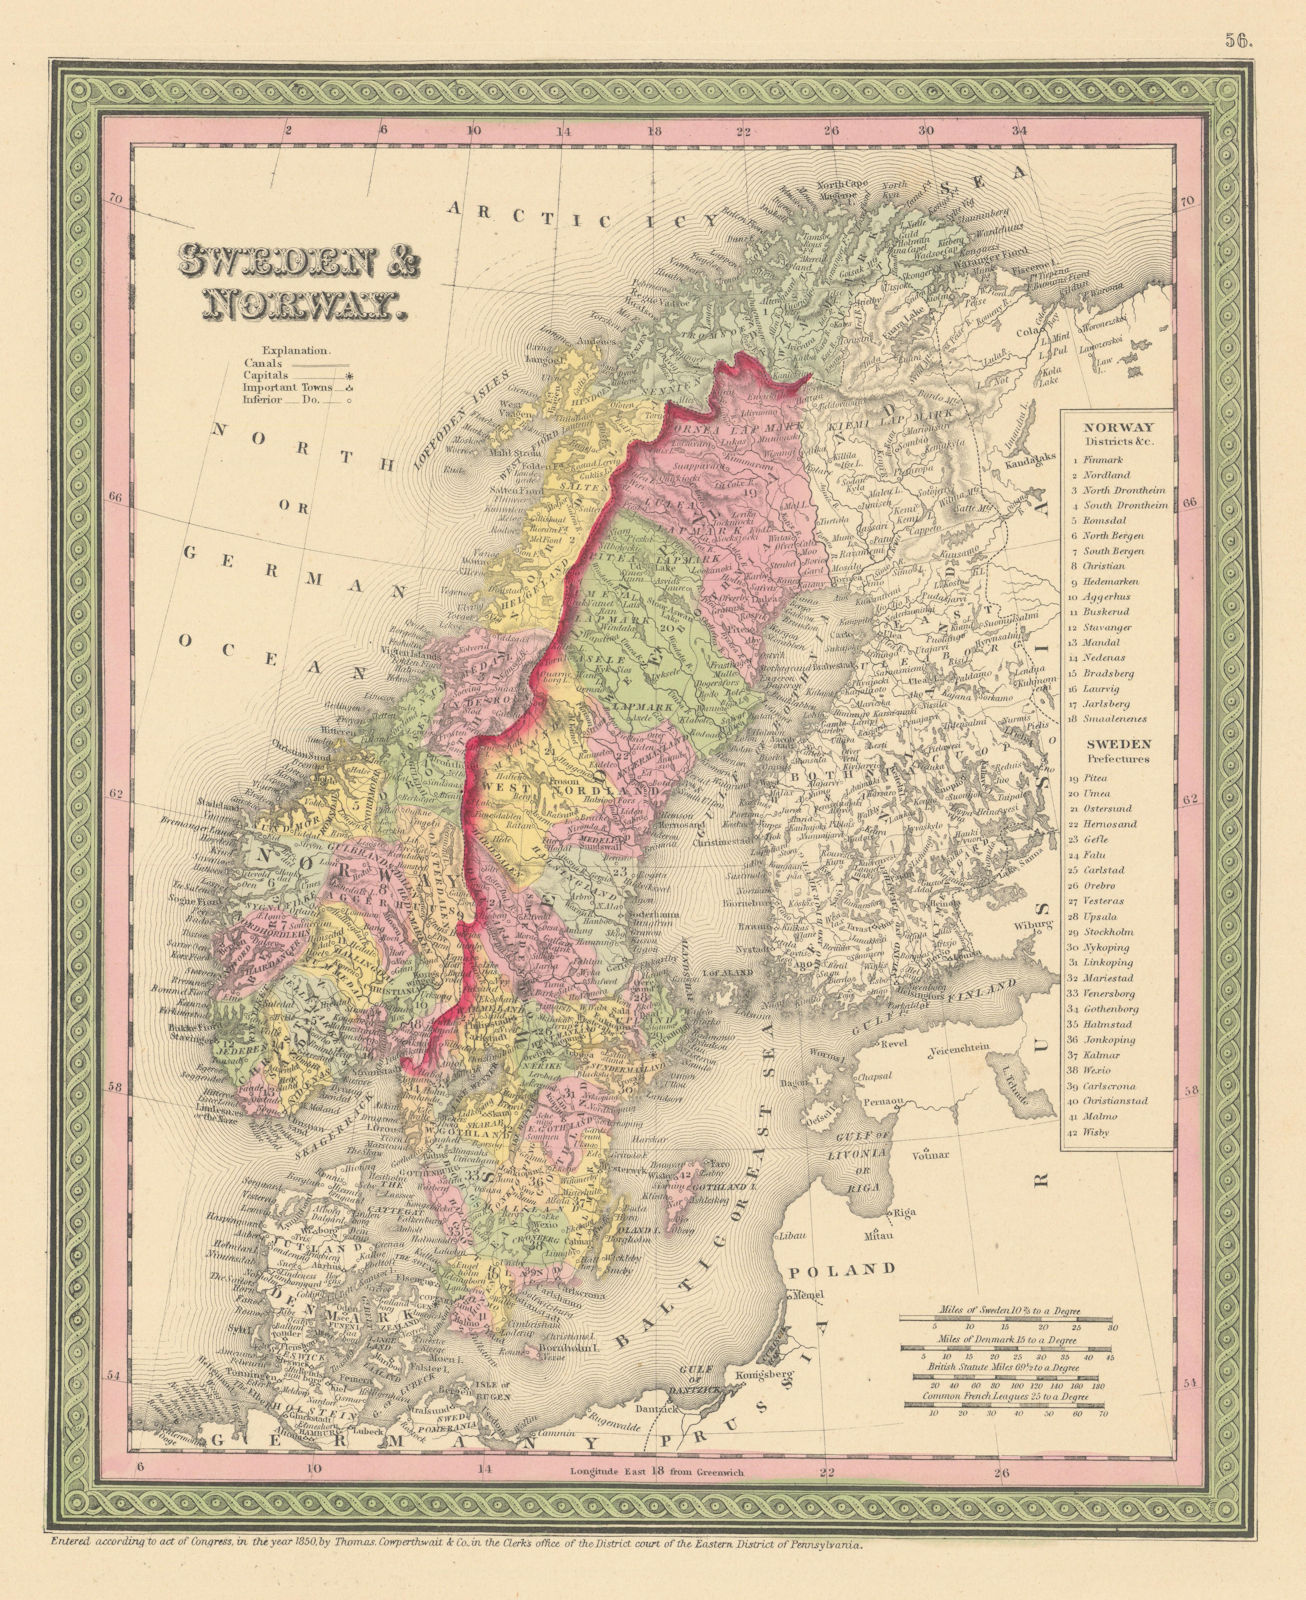 Associate Product Sweden & Norway. Scandinavia. THOMAS, COWPERTHWAIT 1852 old antique map chart